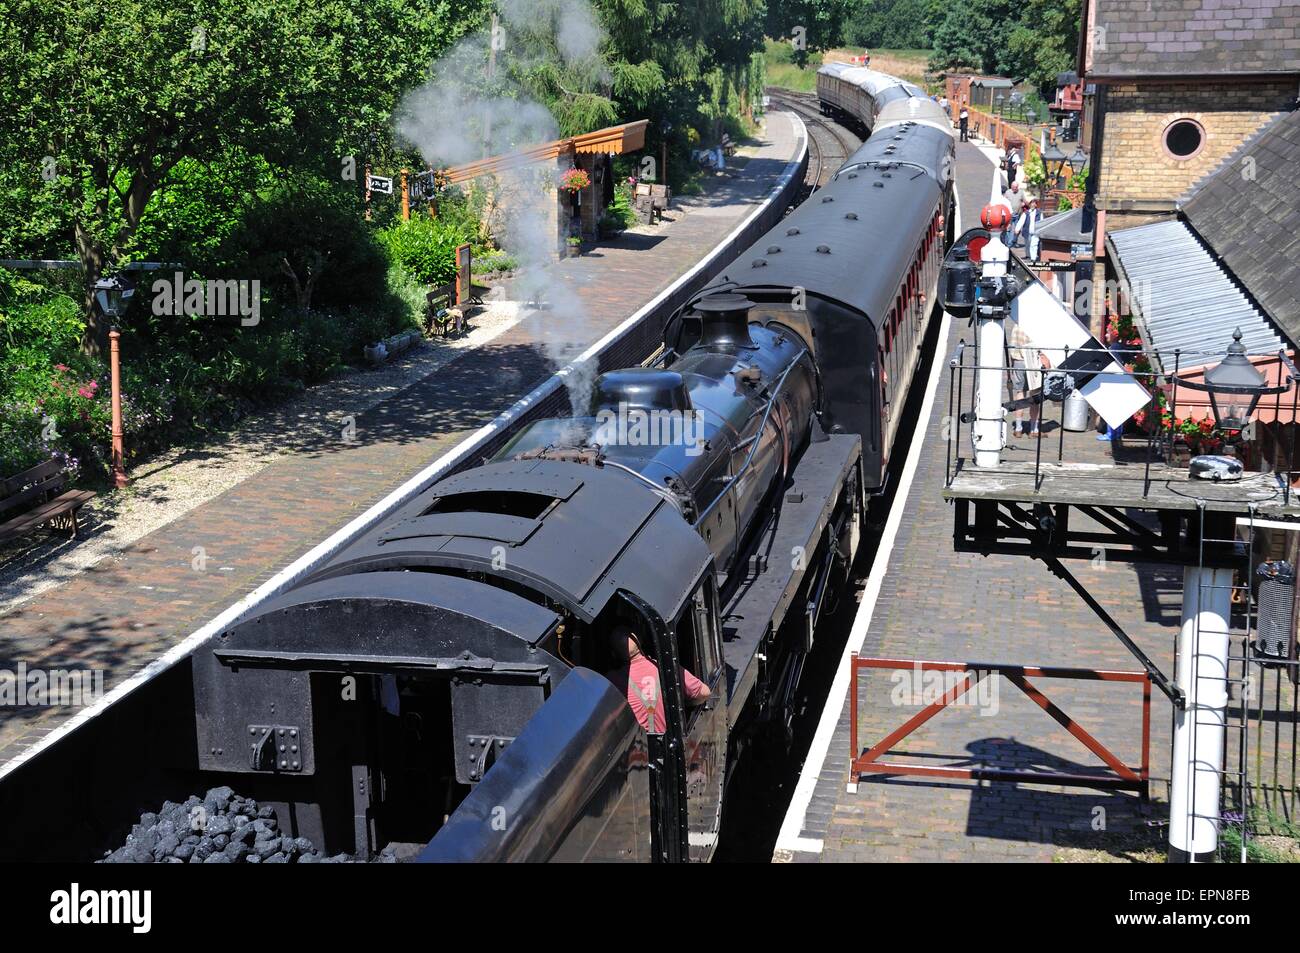 Steam Locomotive British Rail Standard Class 5 4-6-0 number 73129, Arley, Worcestershire, England, UK, Western Europe. Stock Photo